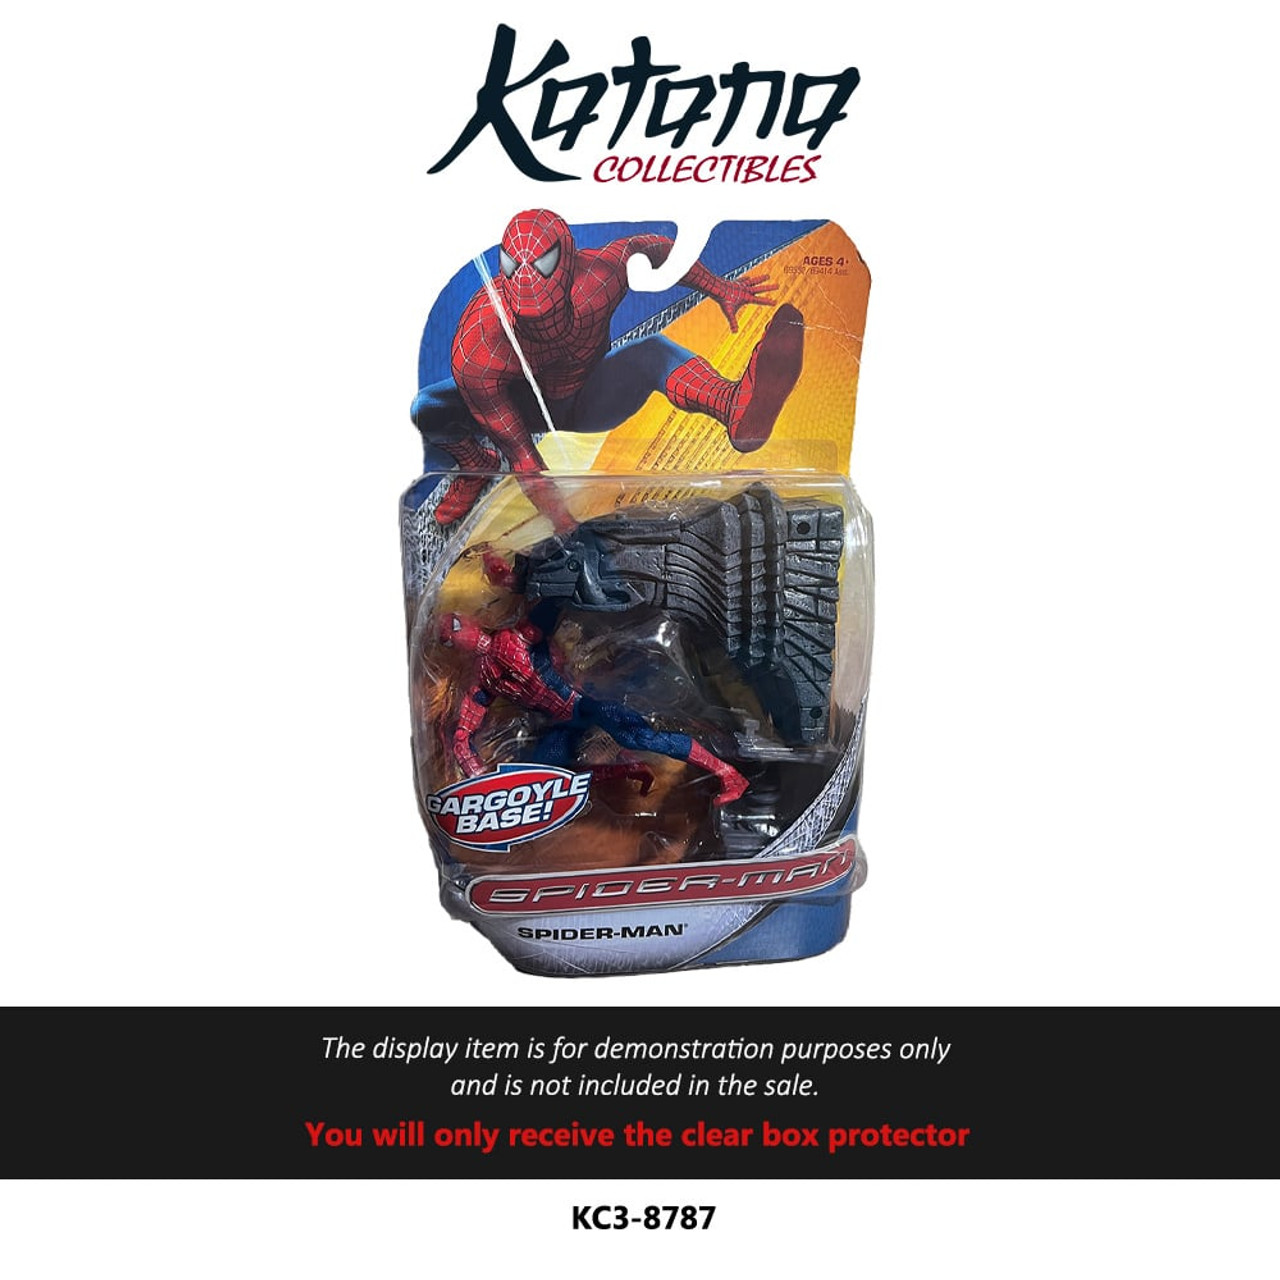 Katana Collectibles Protector For Hasbro 2007 Marvel Trilogy Spider-Man